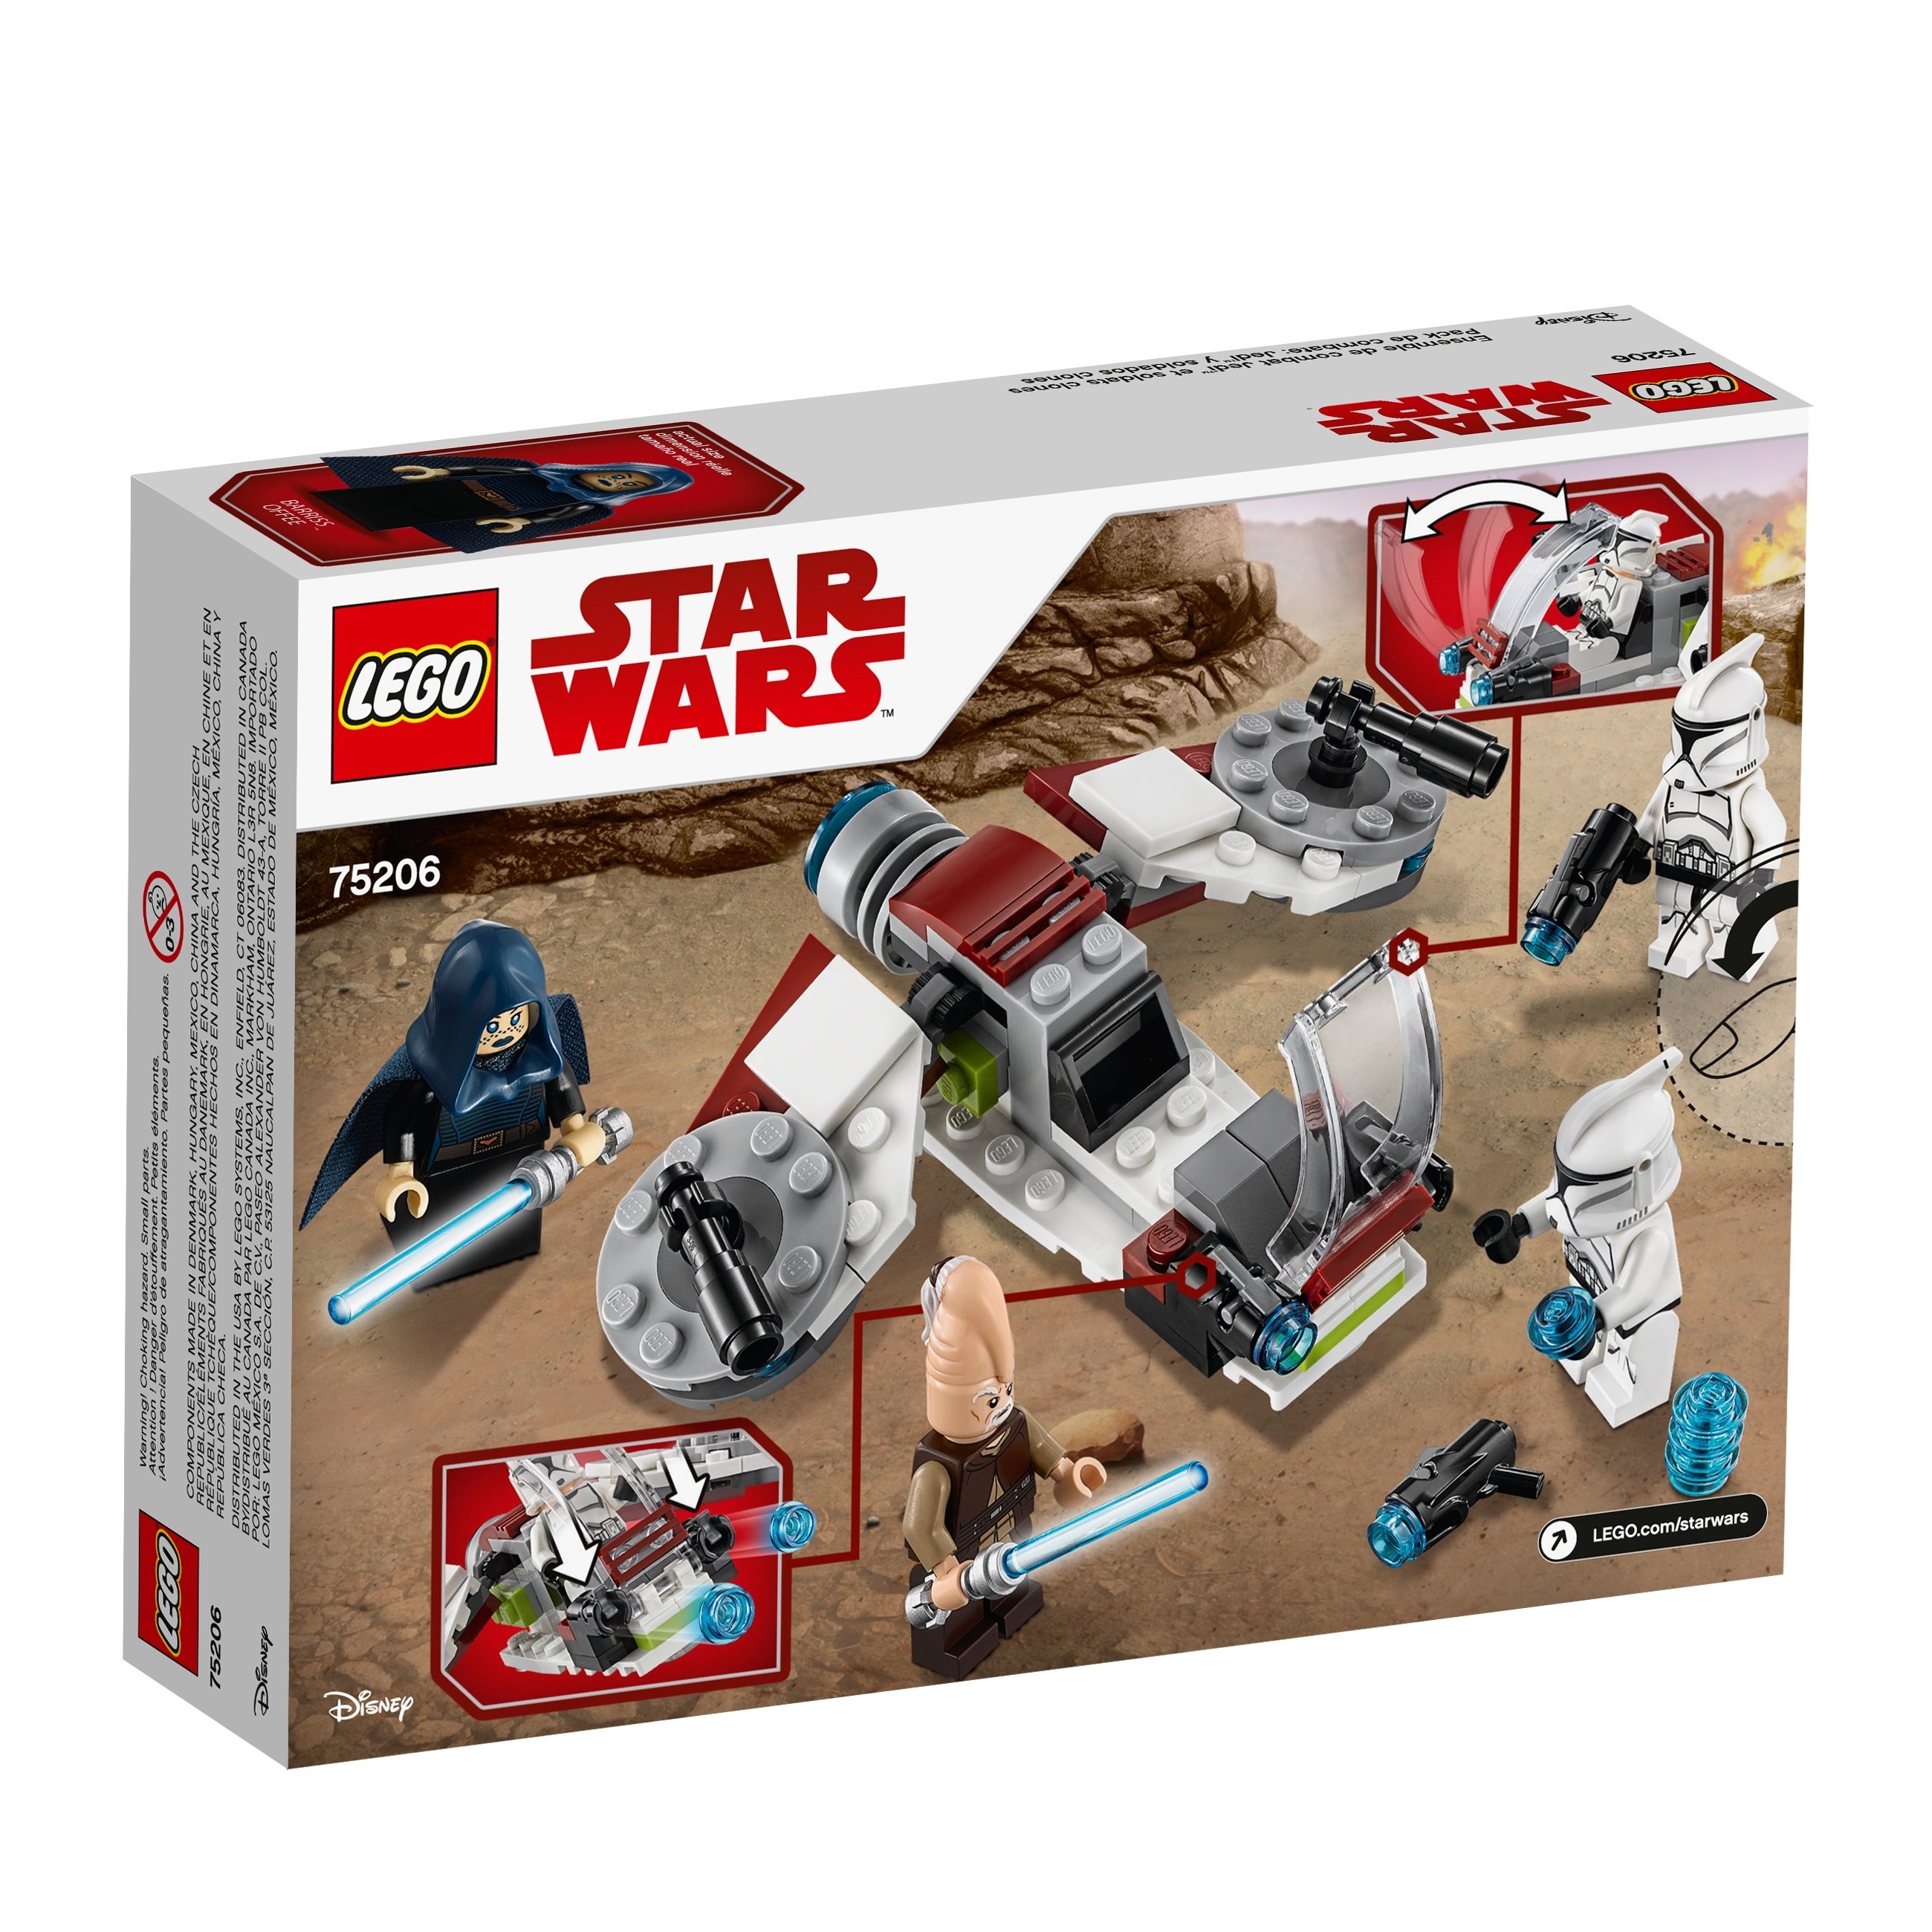 LEGO STAR WARS 75206 Jedi and Clone Troopers Battle Pack NISB *RETIRED* NIB